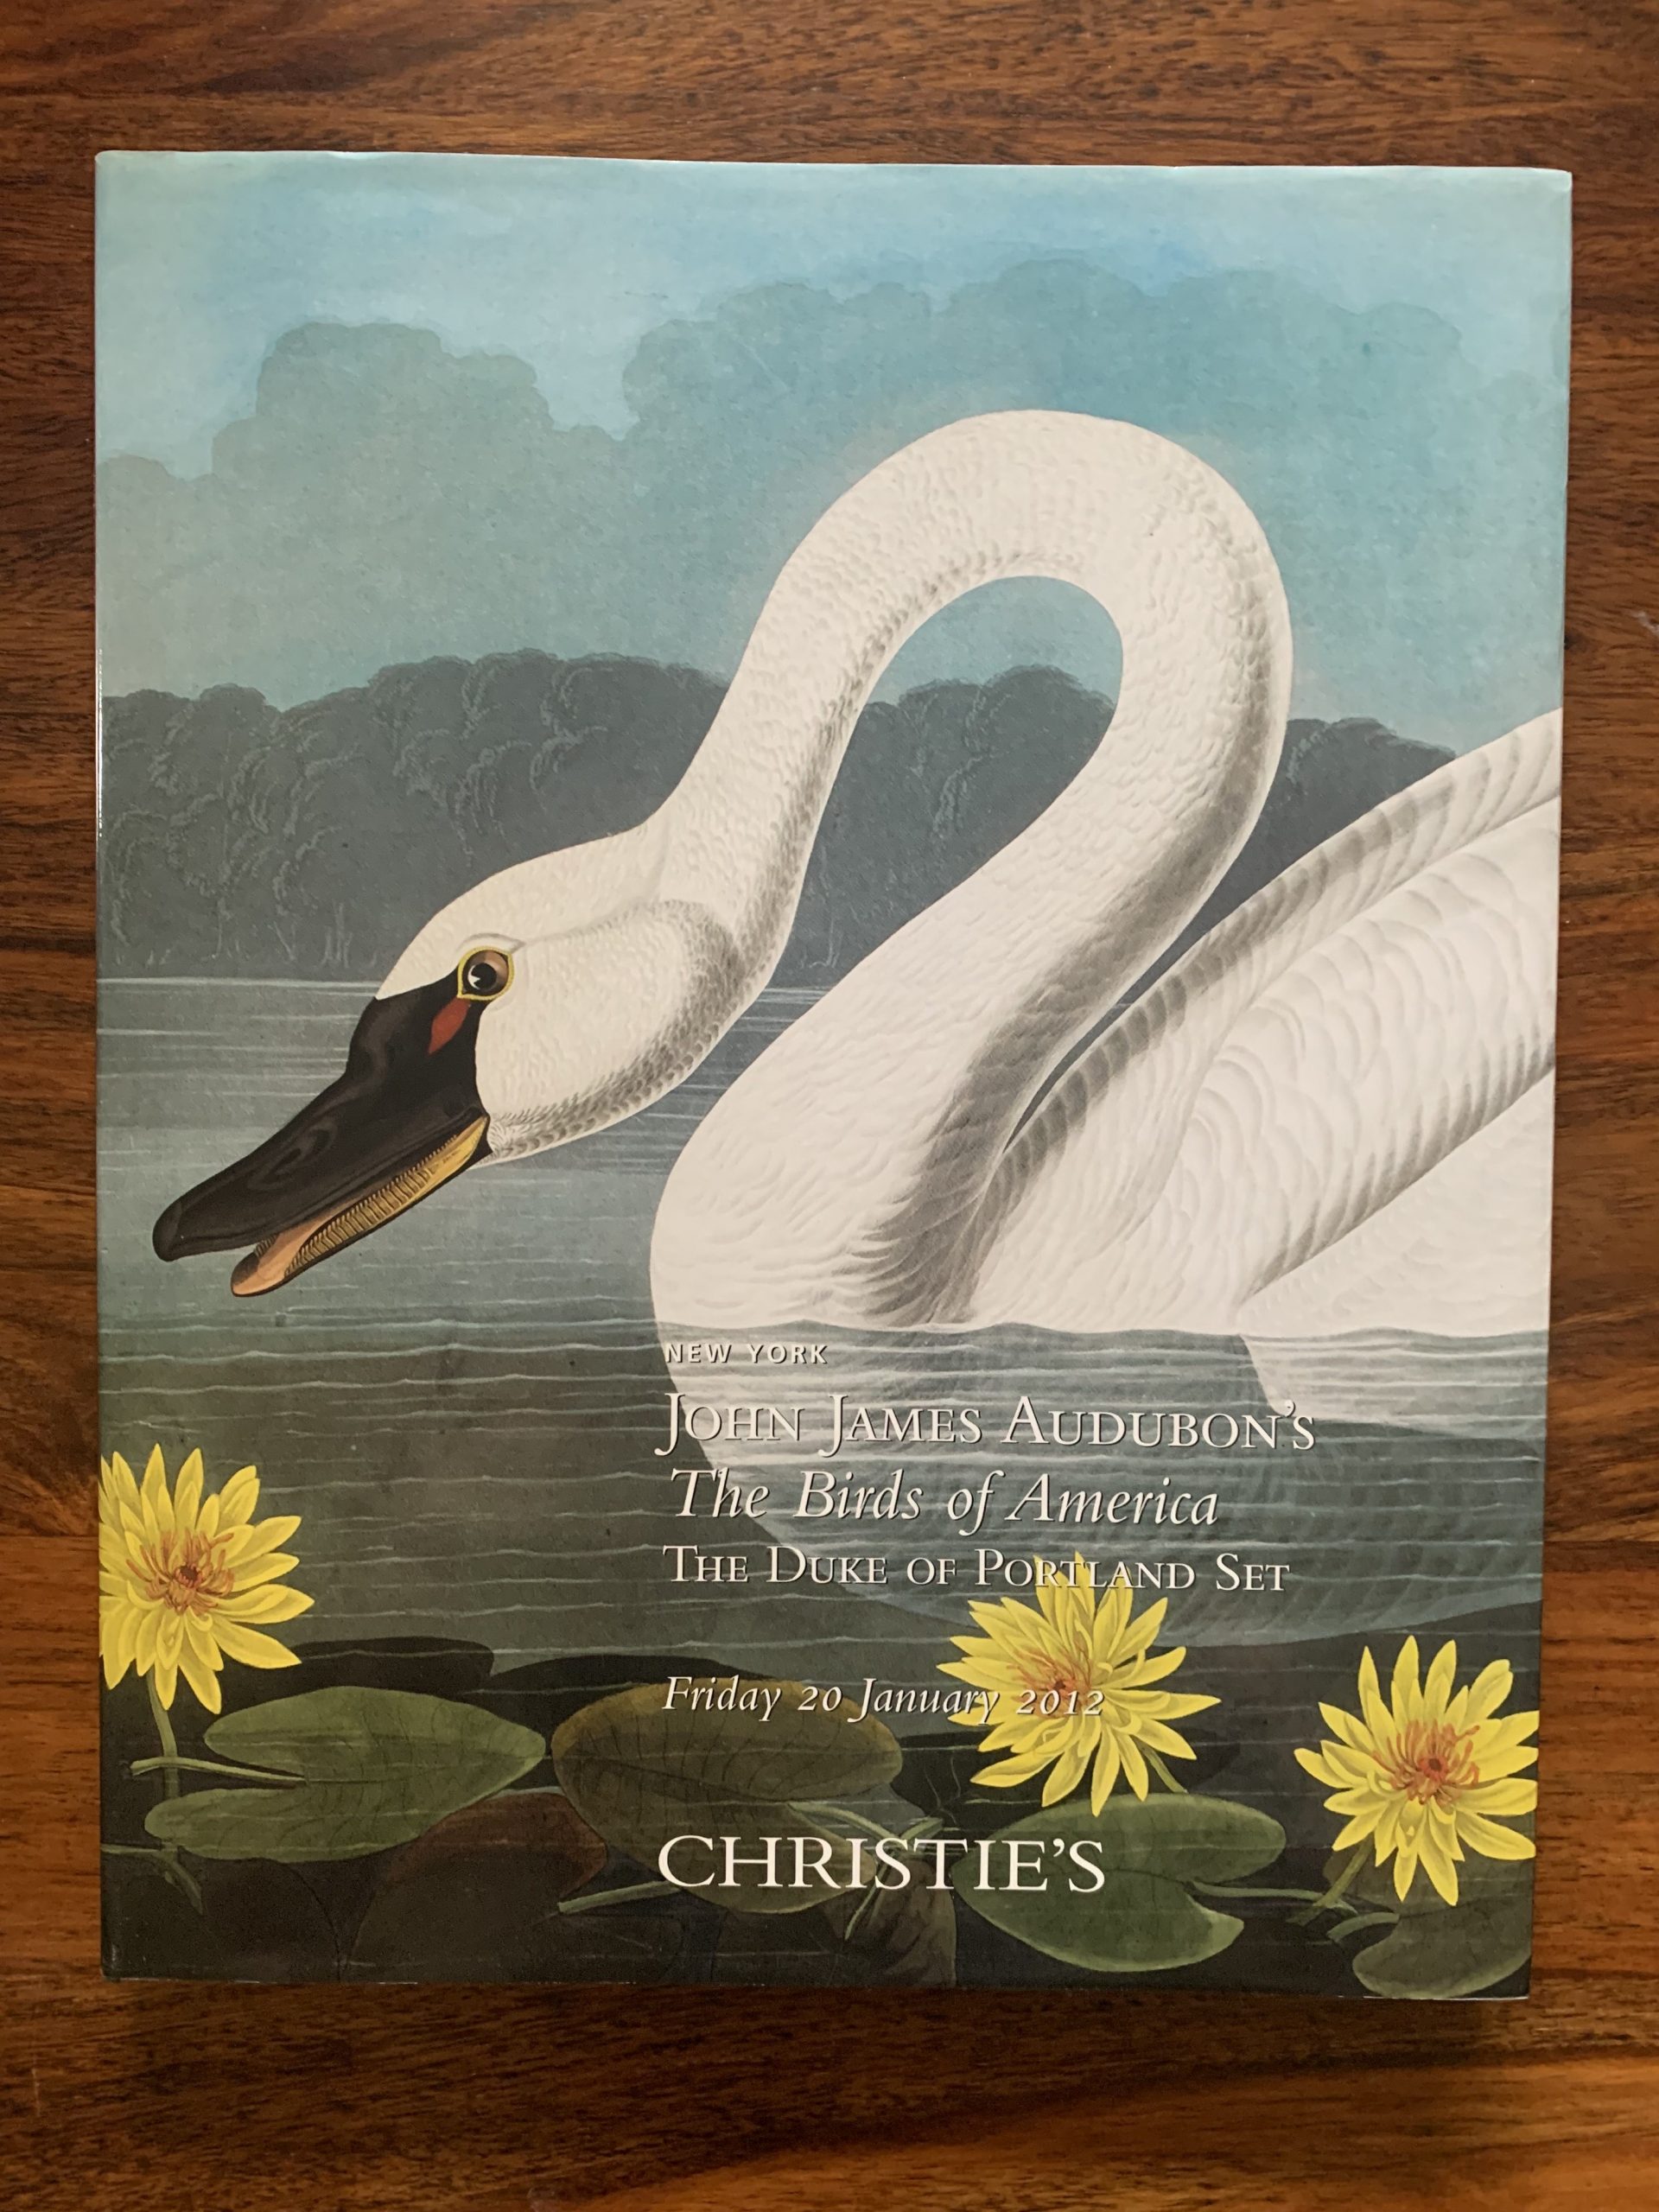 Christie’s. John James Audubon’s ‘The Birds of America’: the Duke of Portland set